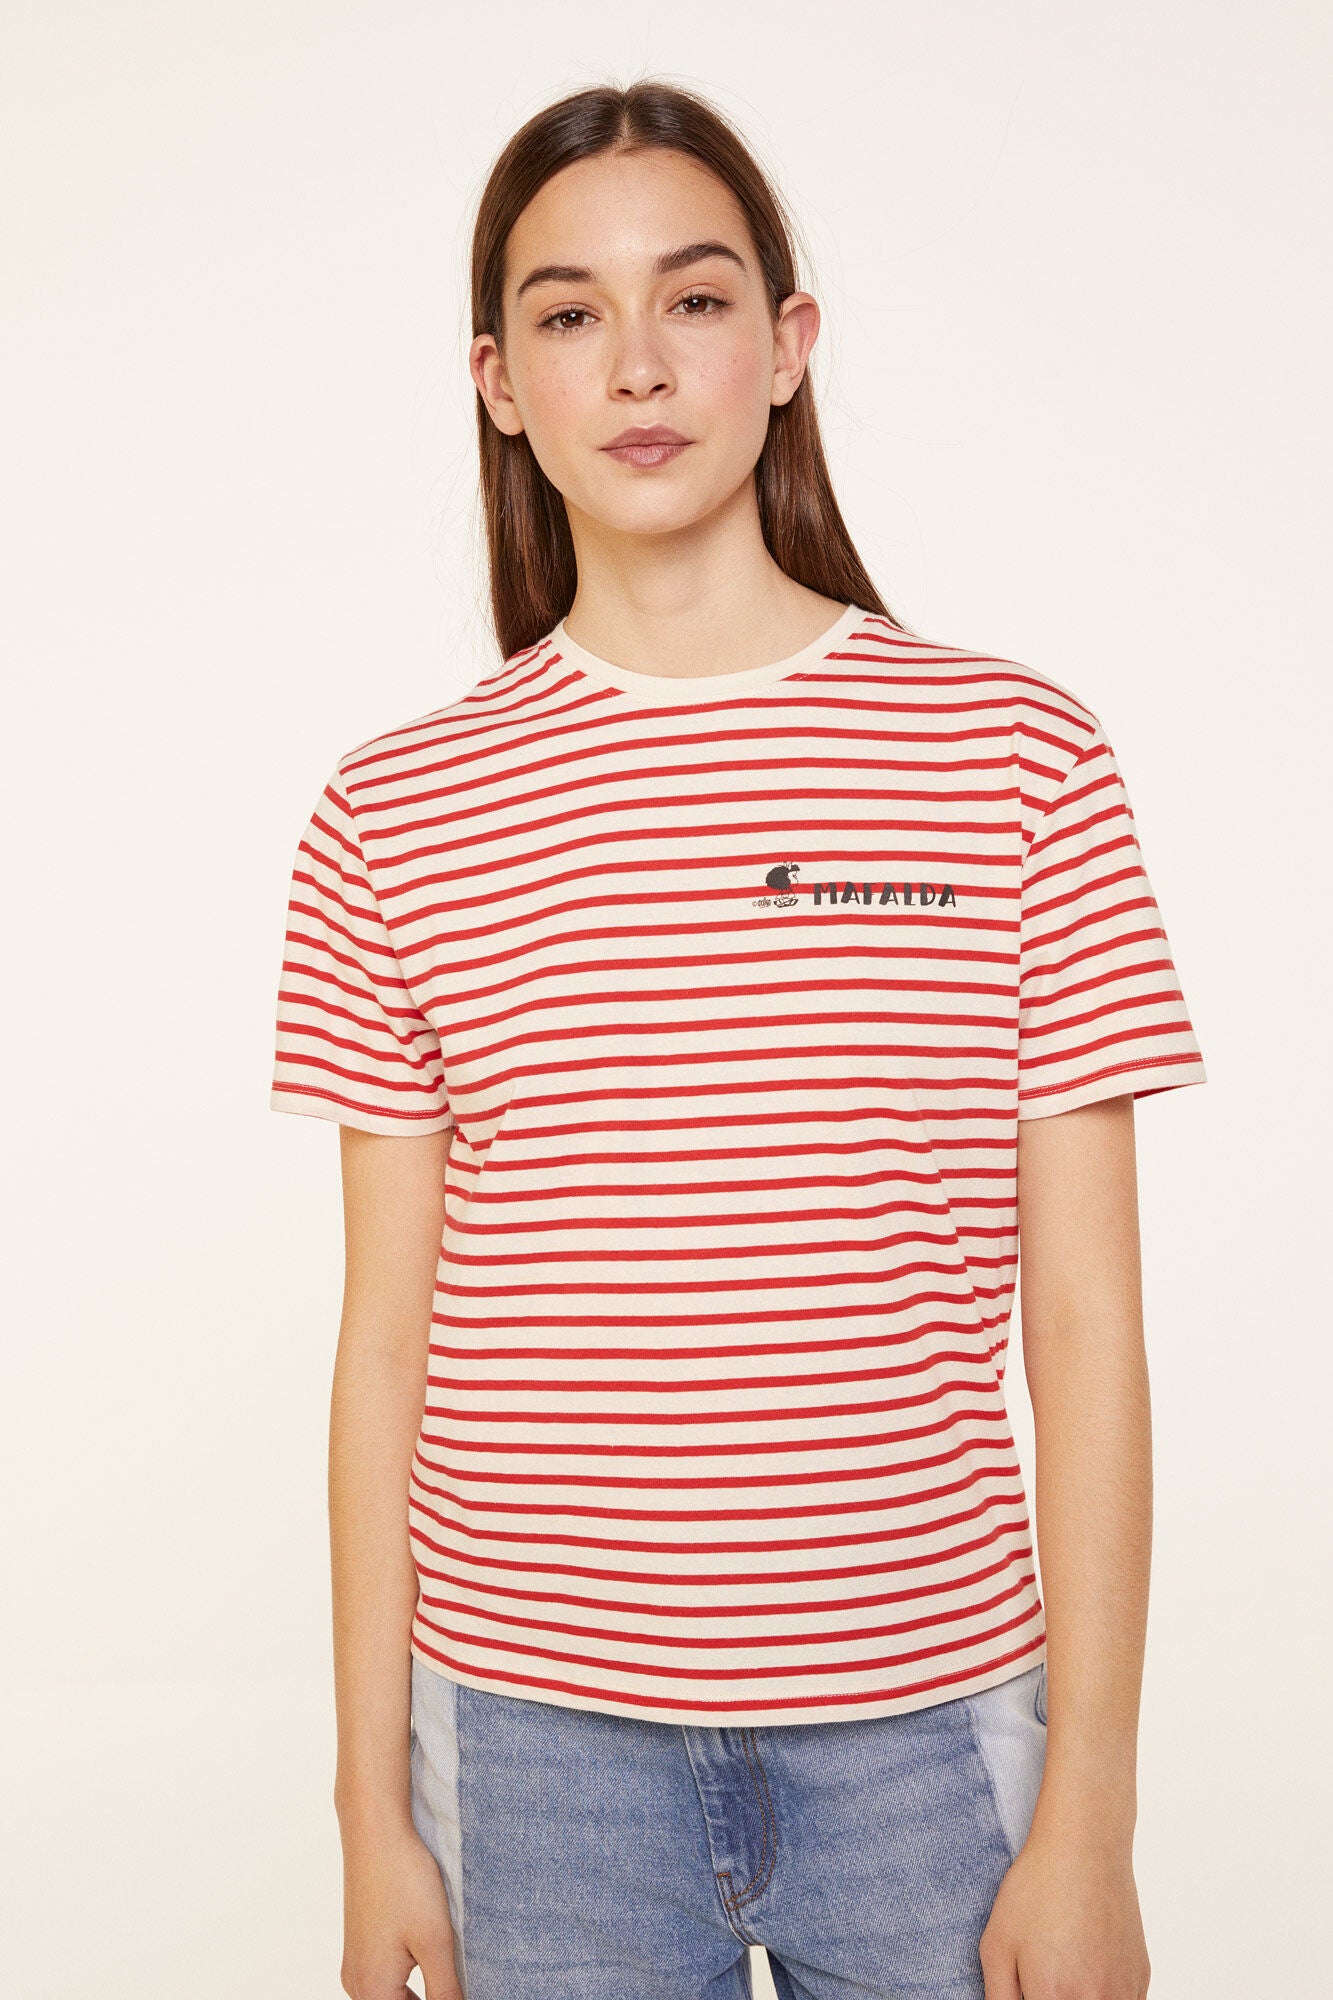 Striped "Mafalda" T-shirt